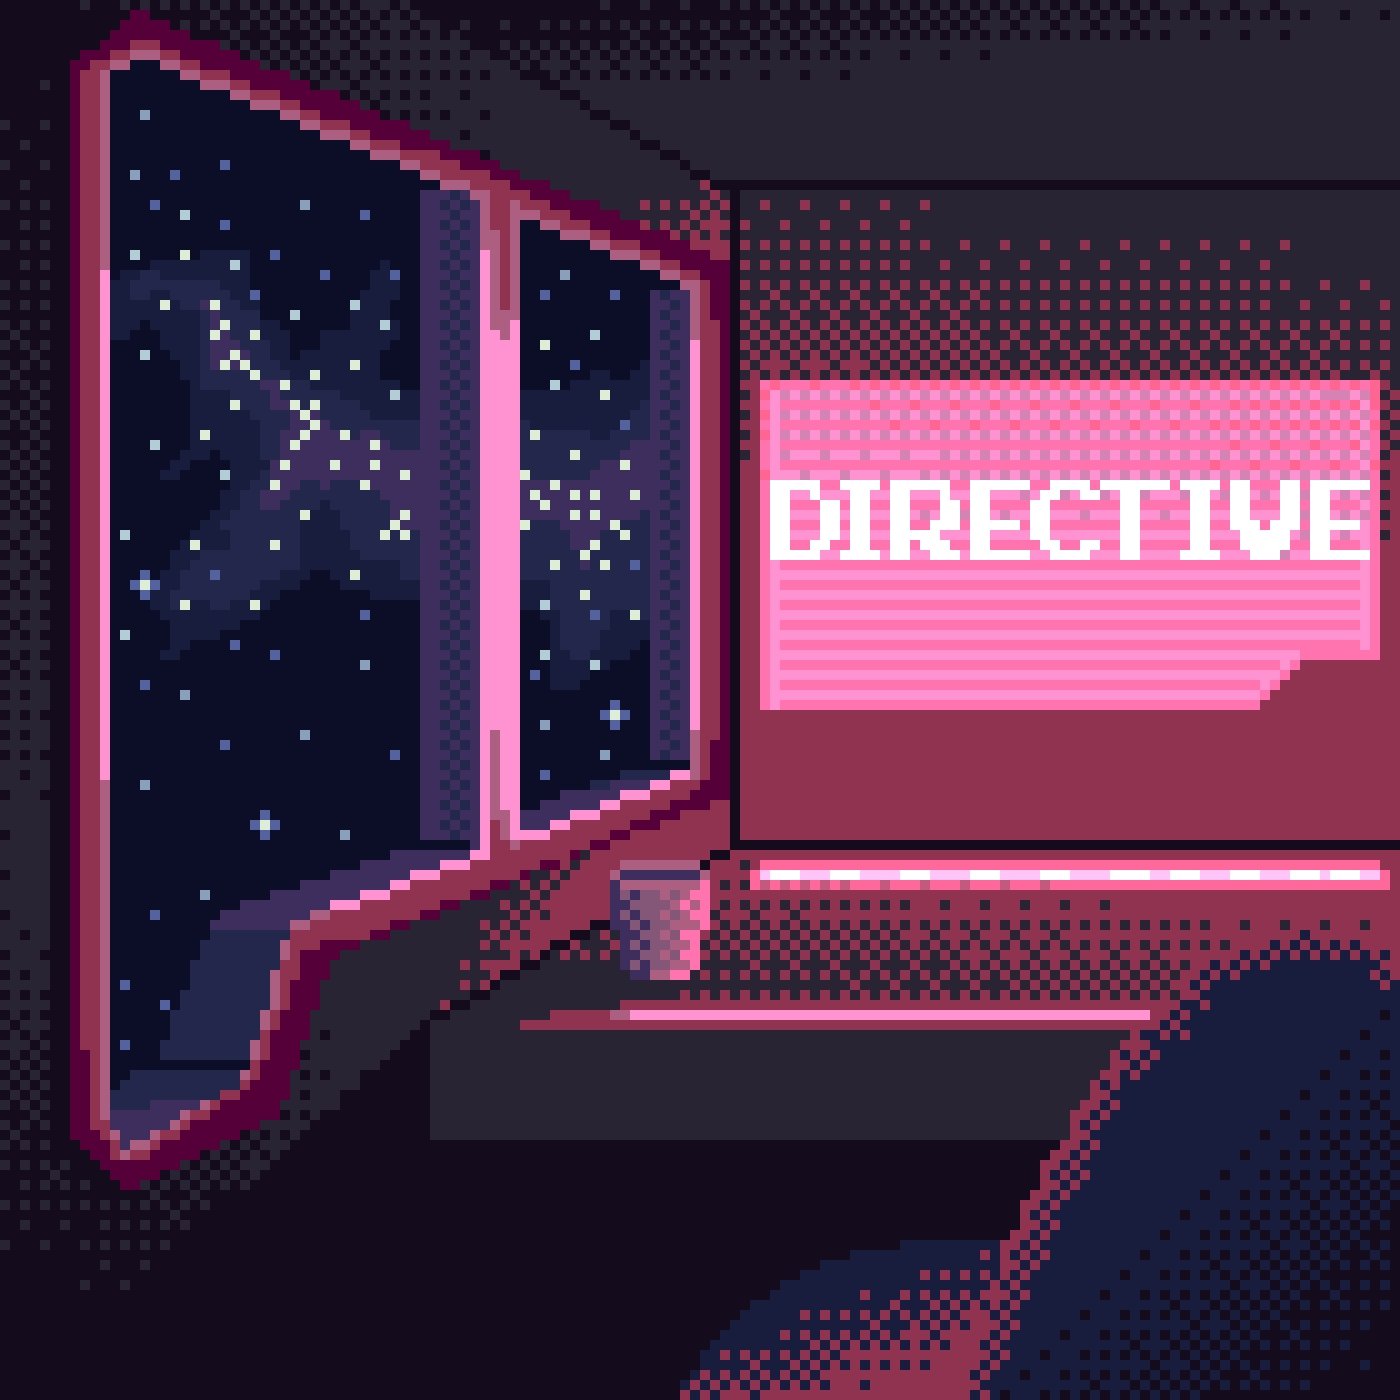 Directive by David Magadan